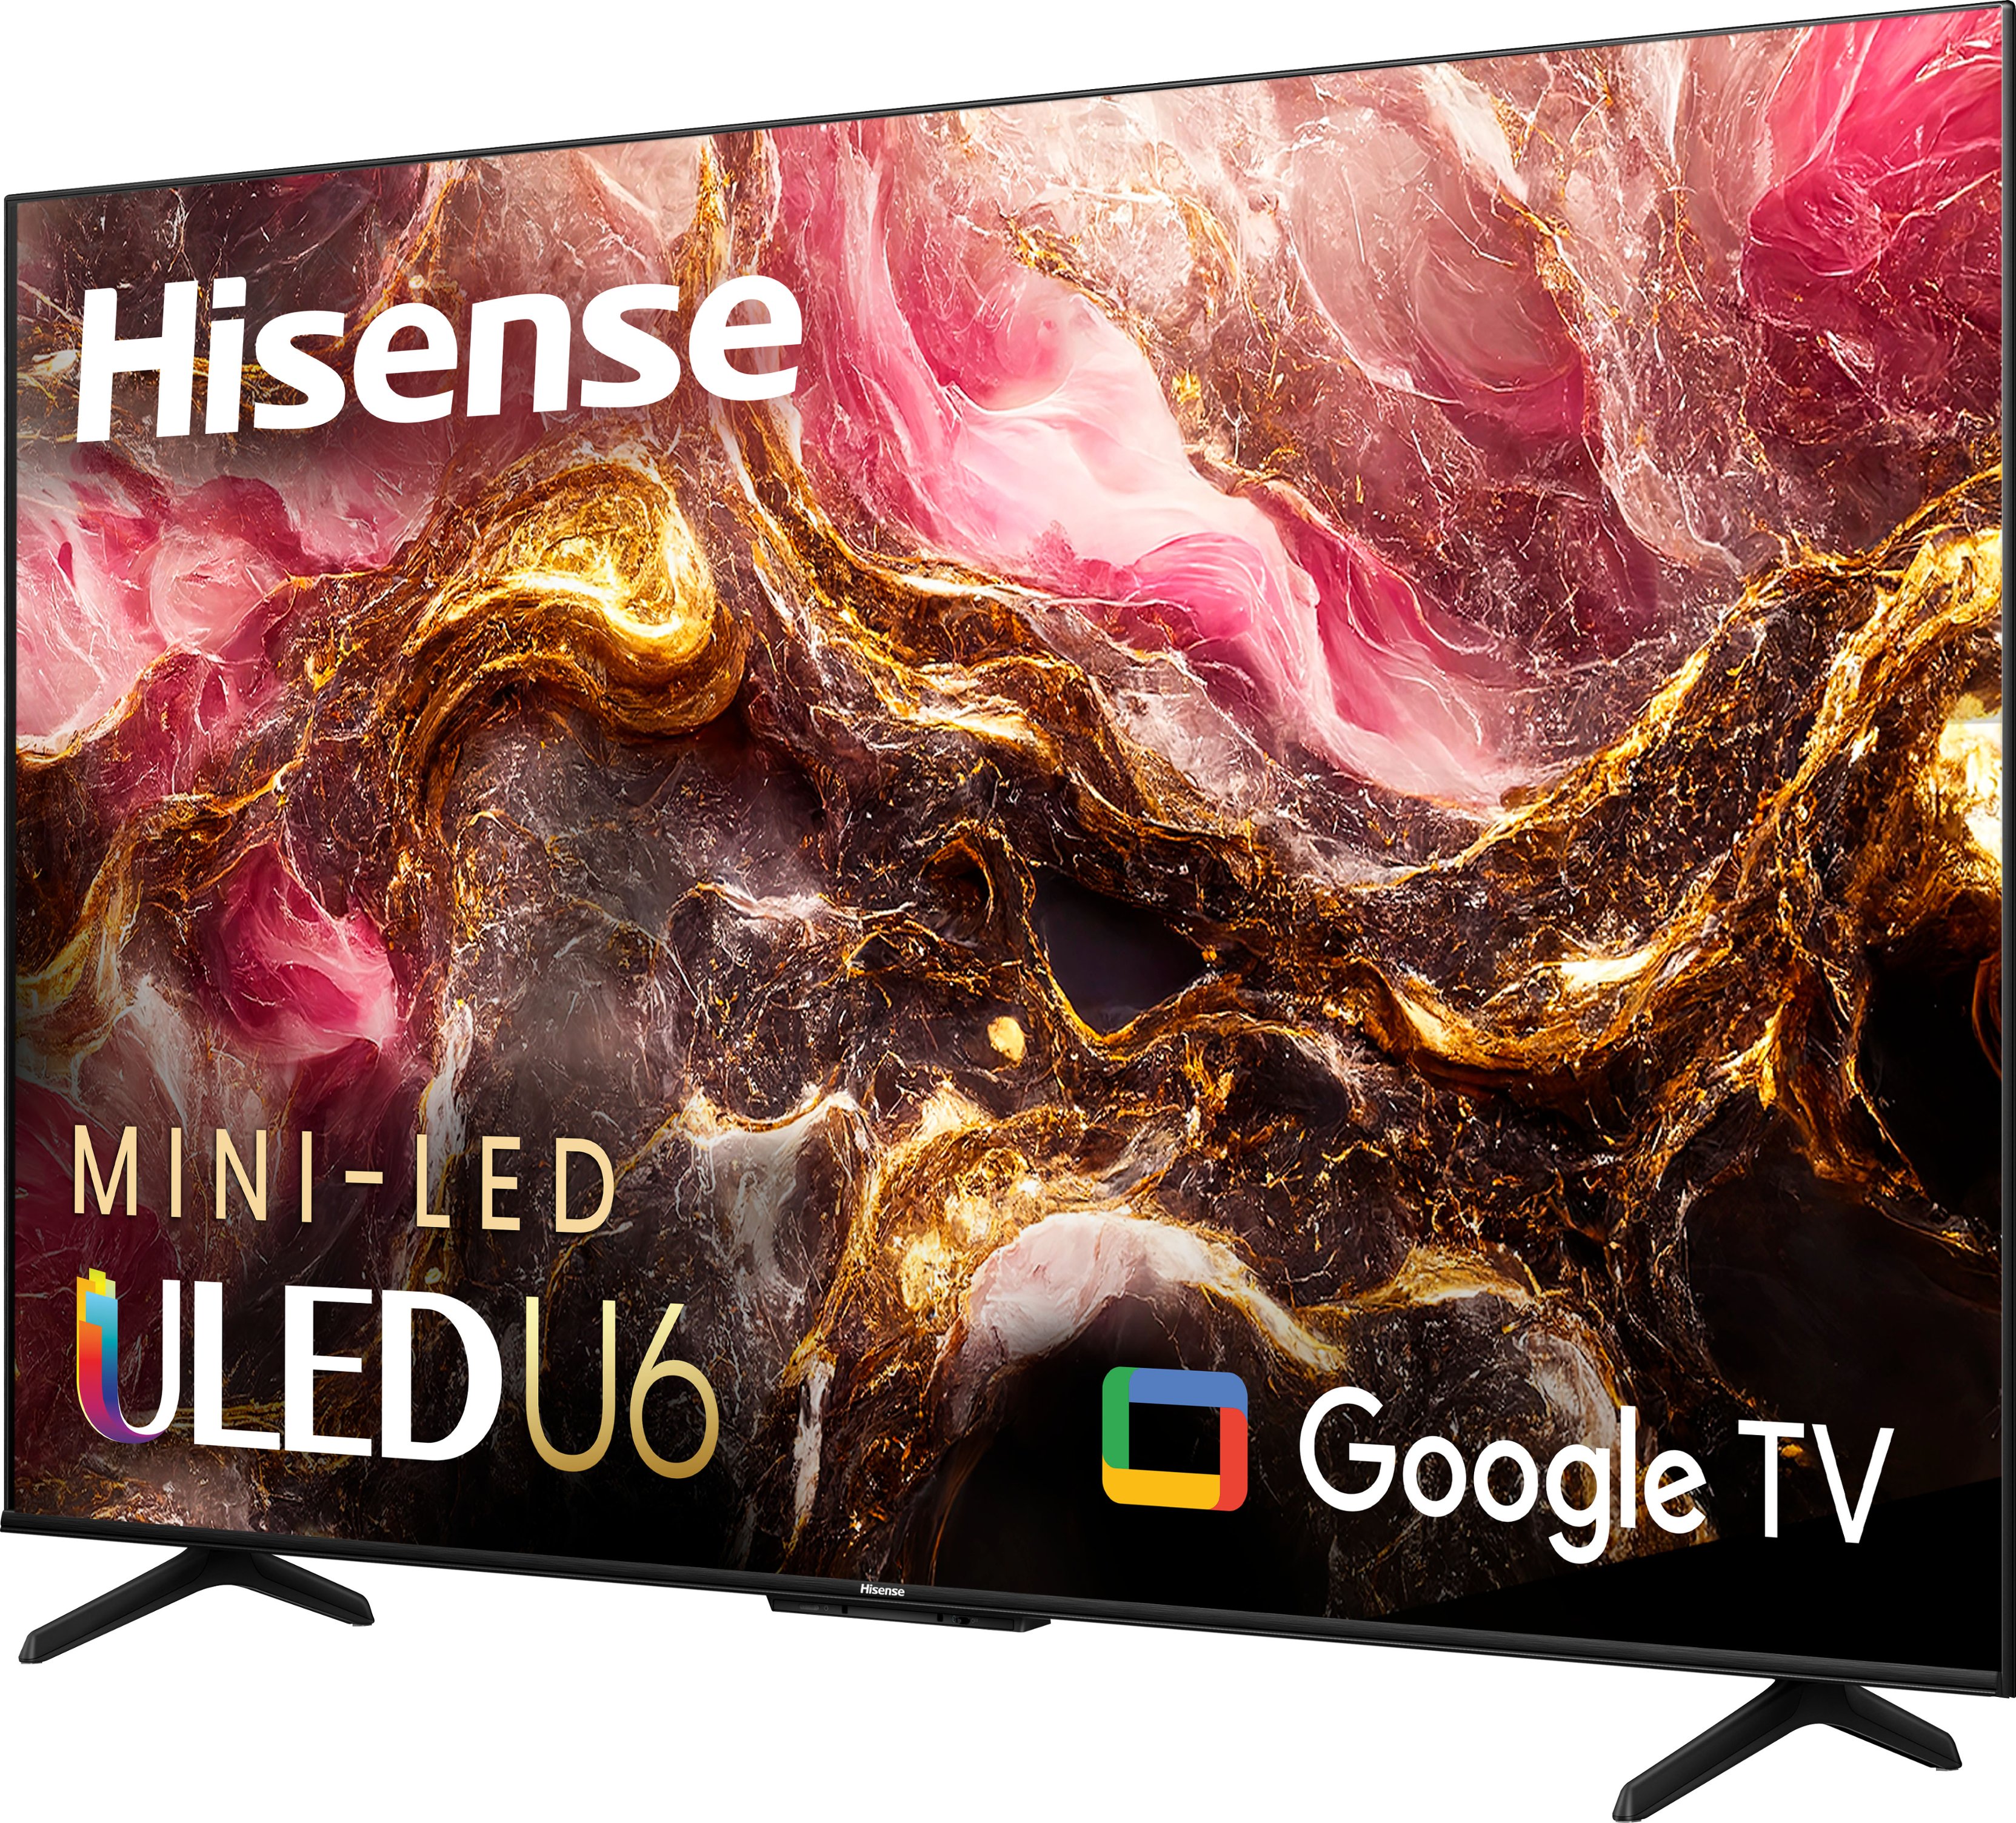 Hisense launches U7K, U6K, and E7K TV models; check specs and price